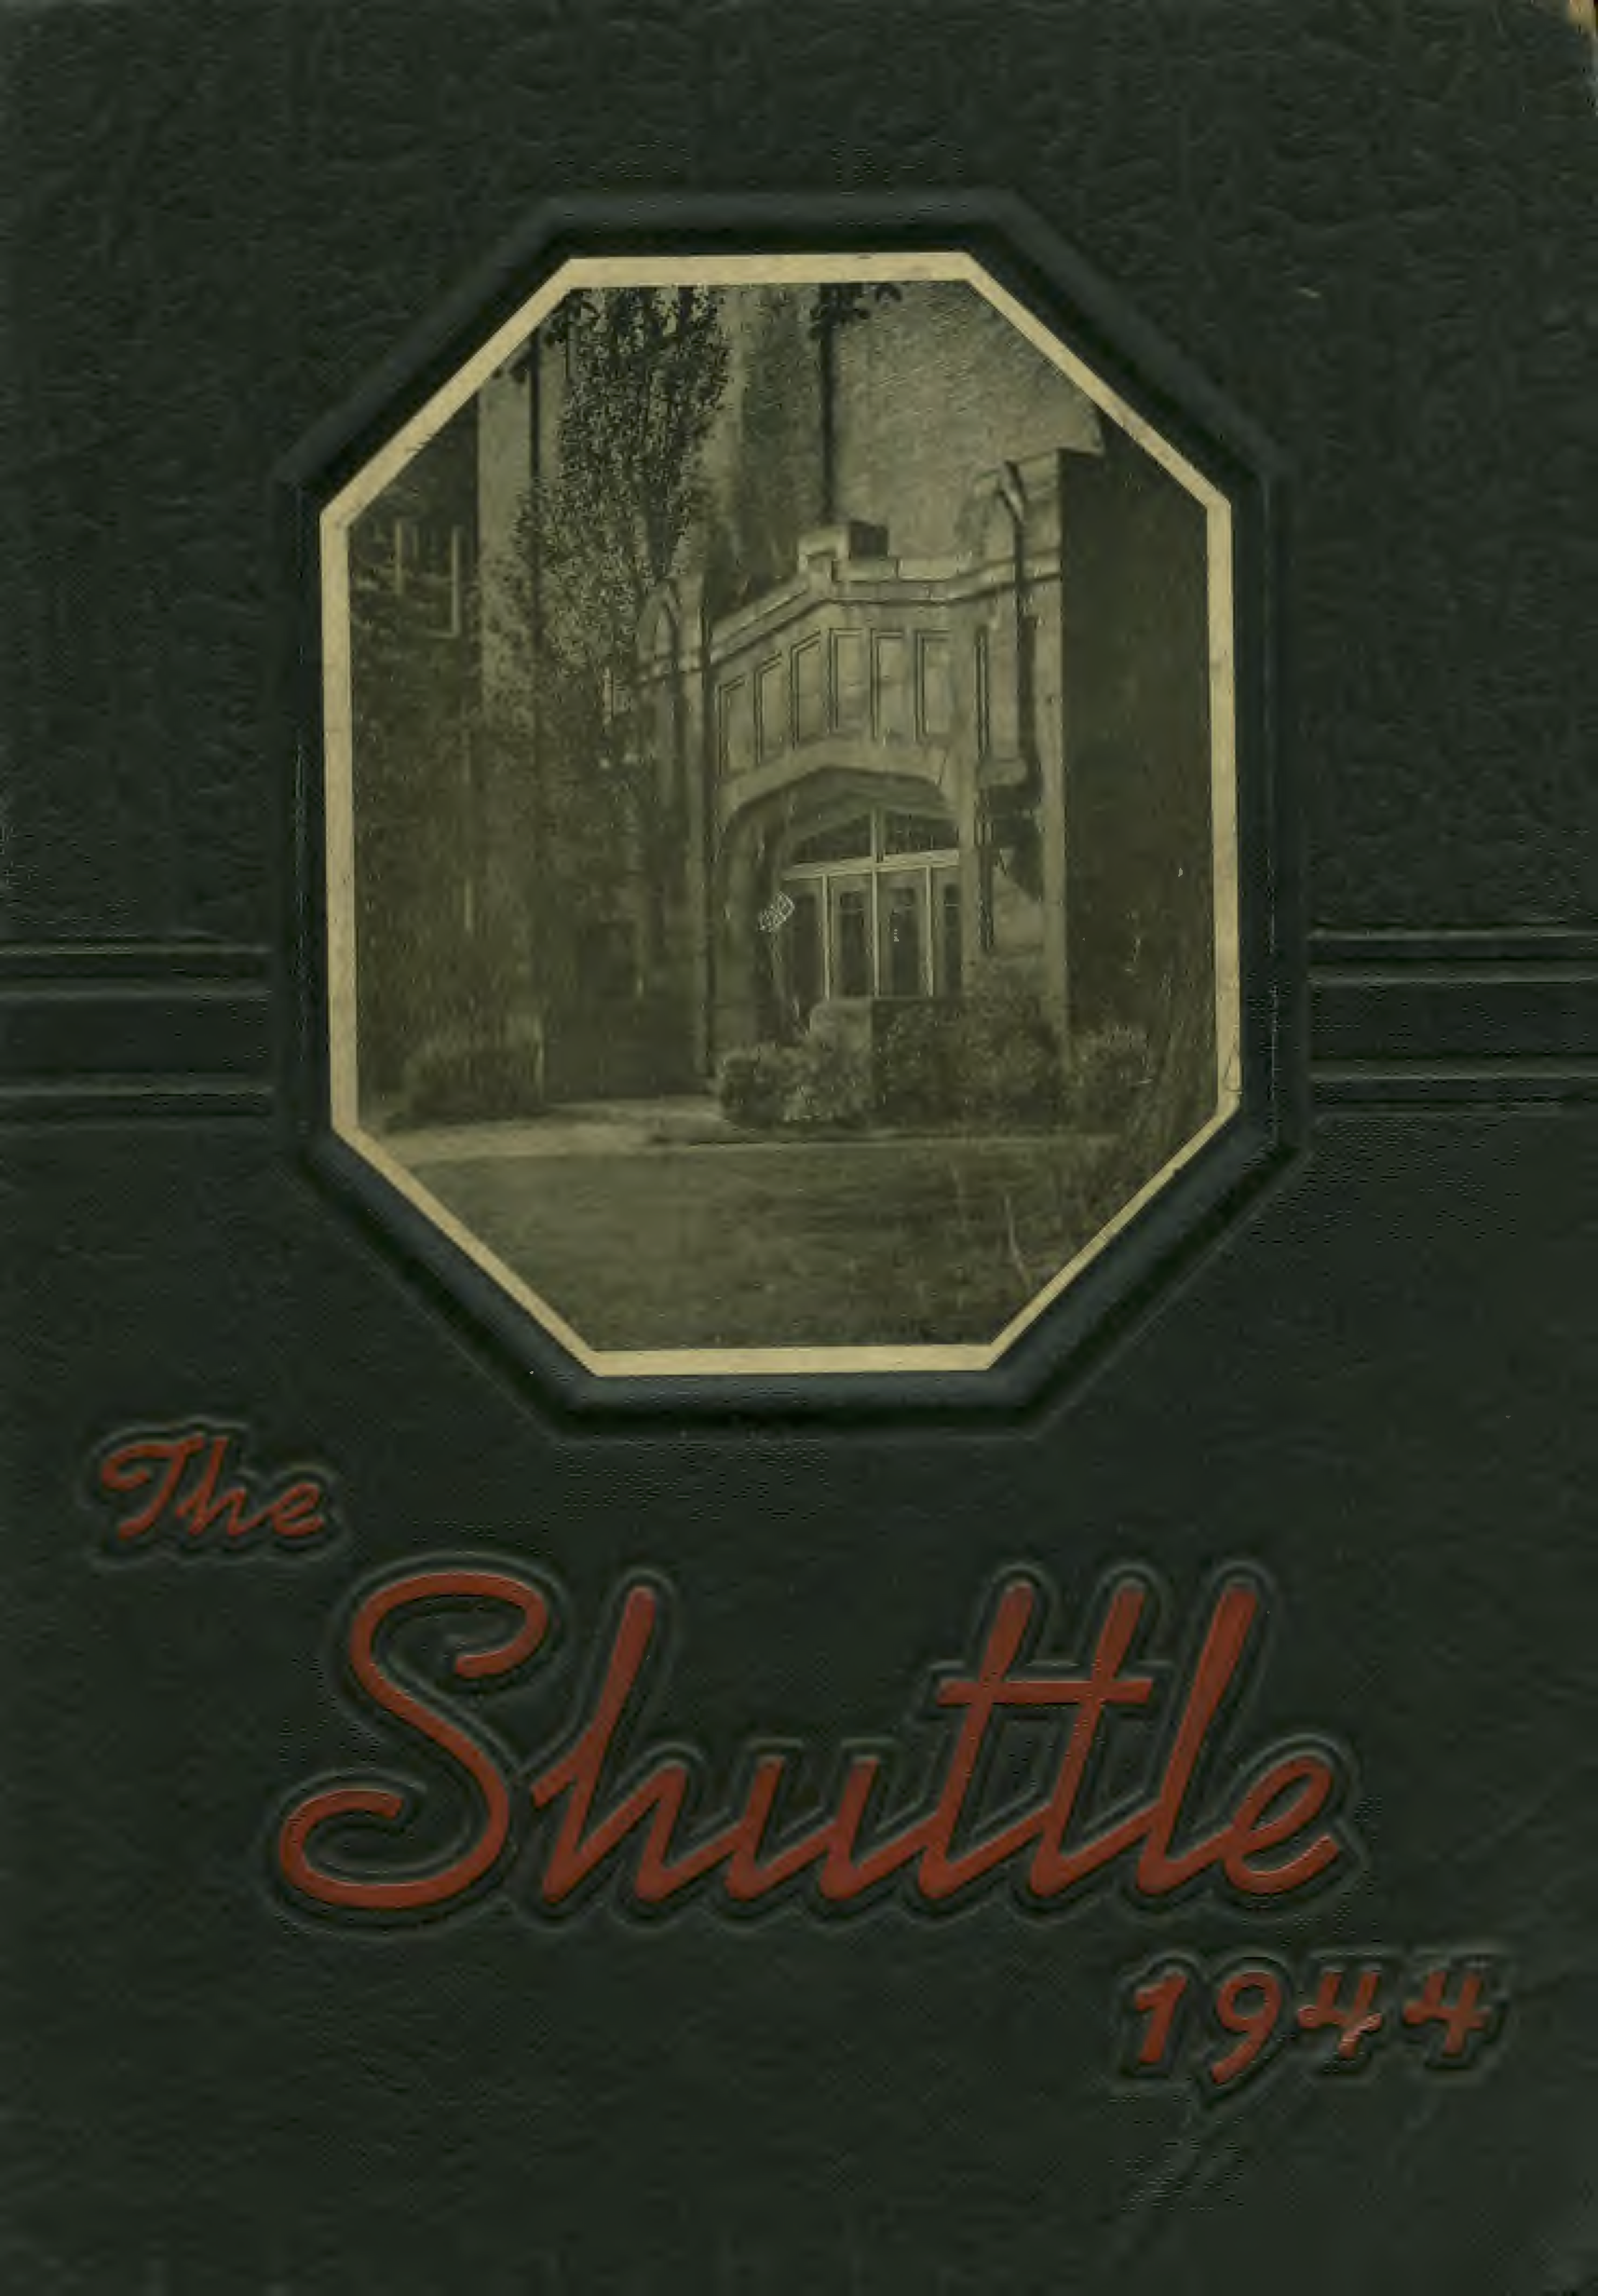 Shaw High School Yearbook 1944